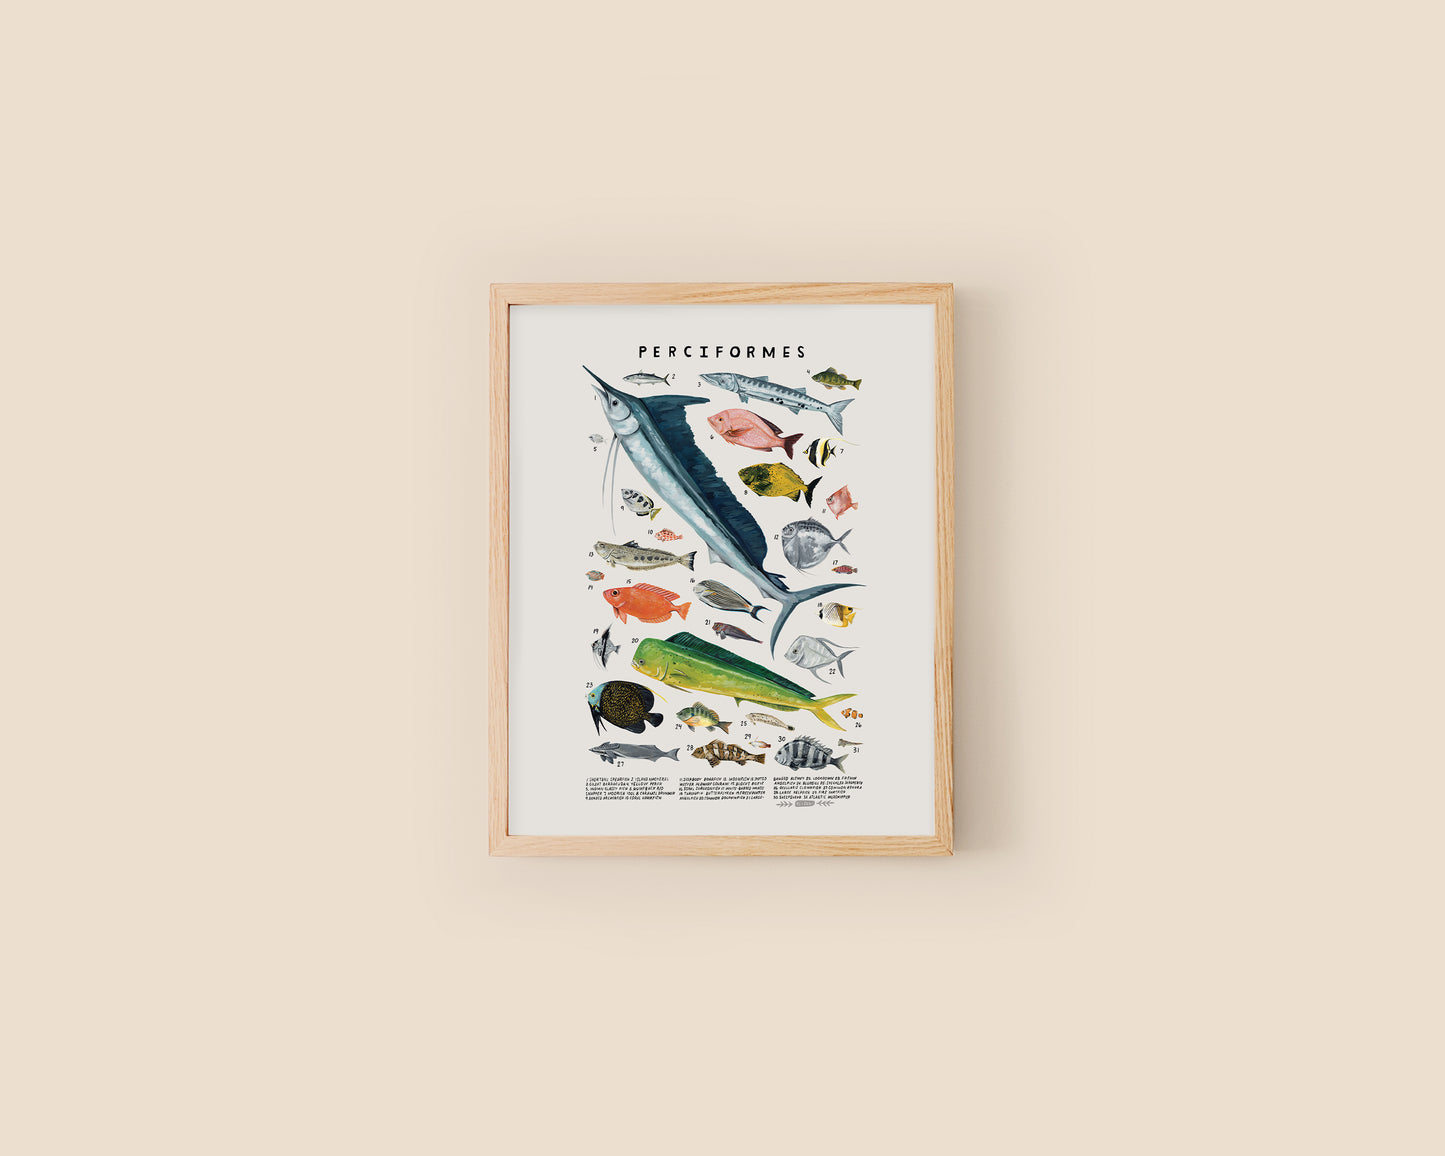 Fish art print- Creatures of the Order Perciformes